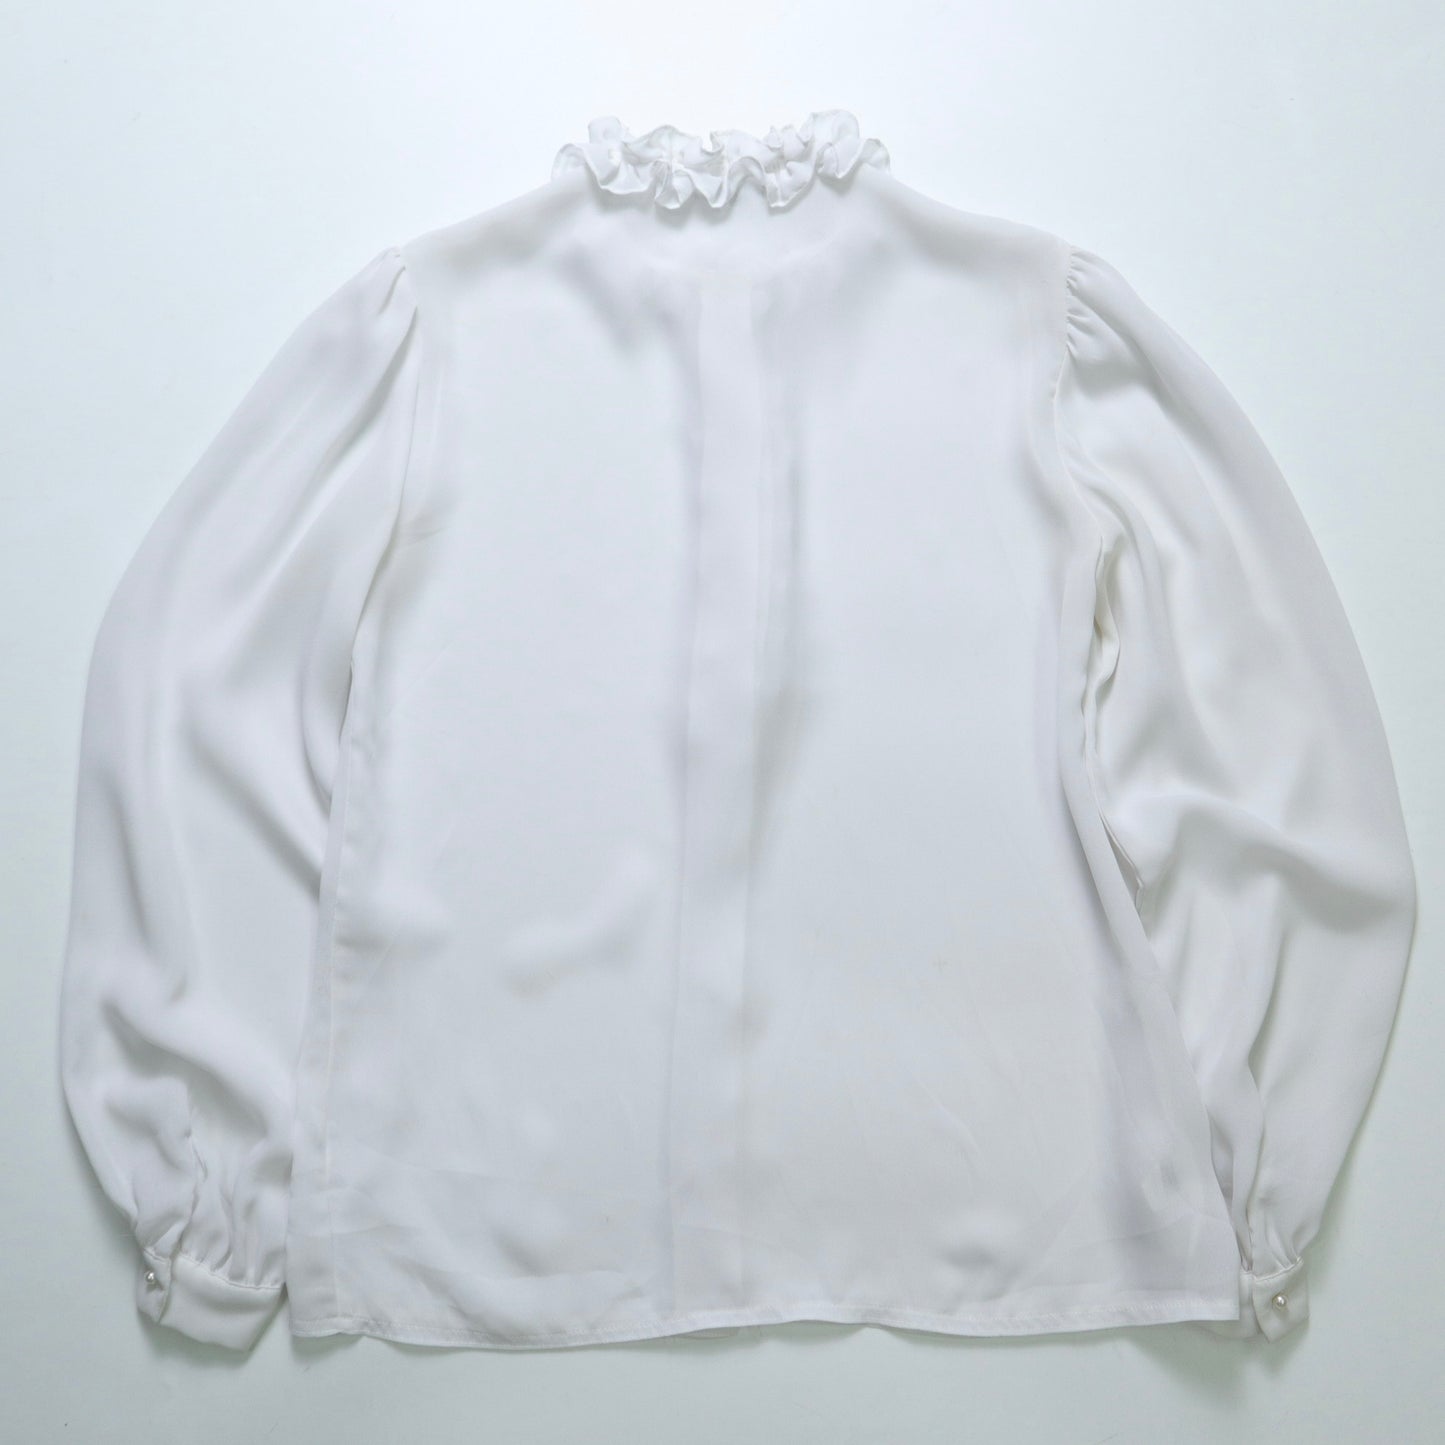 1980s 白色立體荷葉雪紡襯衫